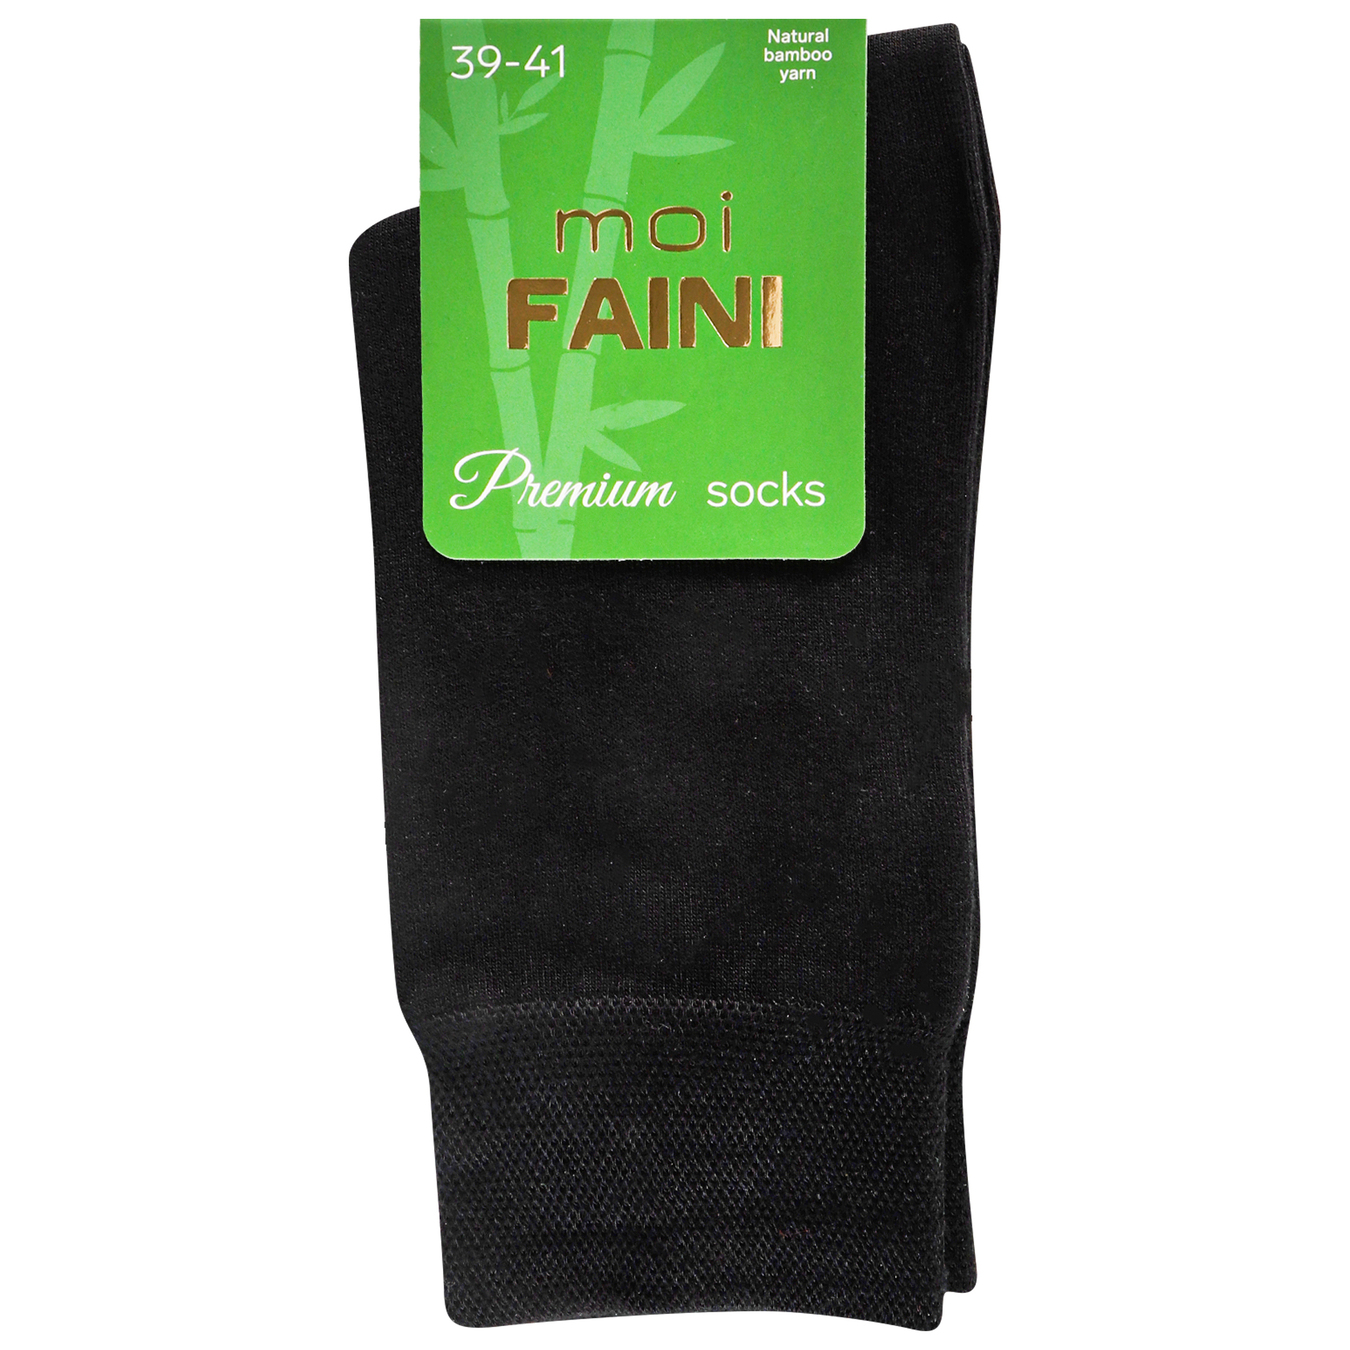 Men's socks moi FAINI bamboo classic black size 39-41 years.